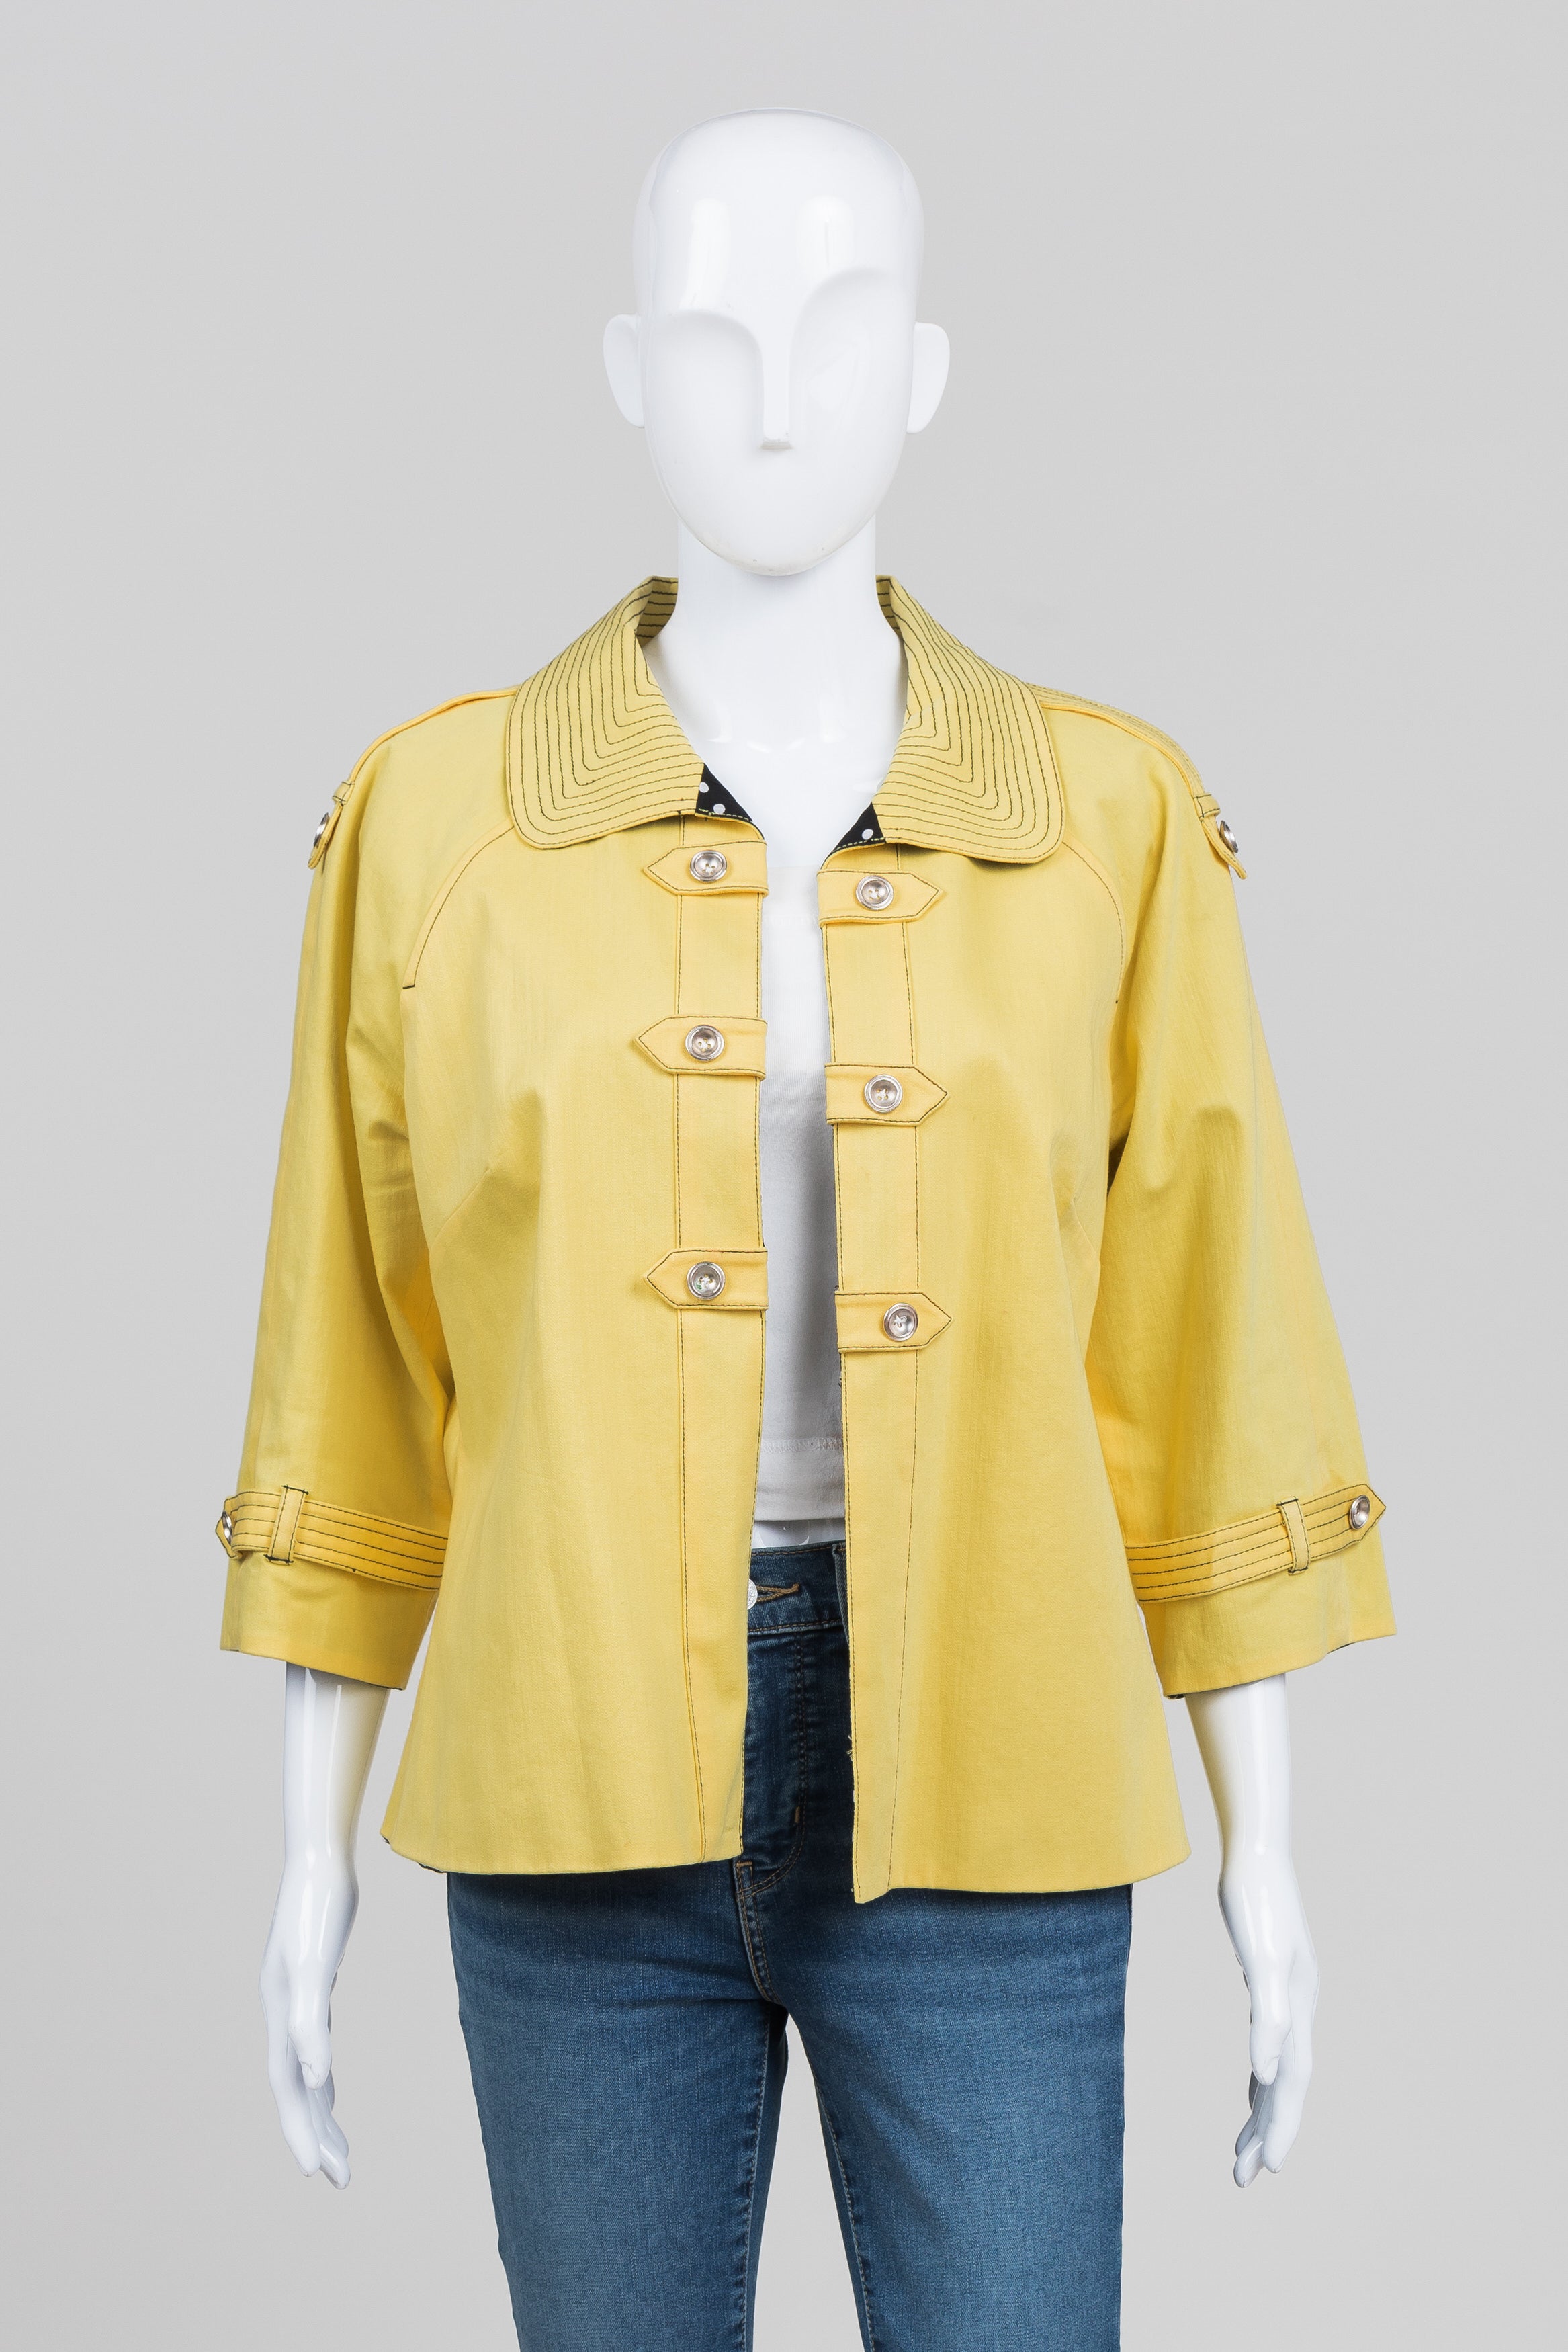 Custom Made Yellow Reversible to Black Dot 3/4 Sleeve Jacket